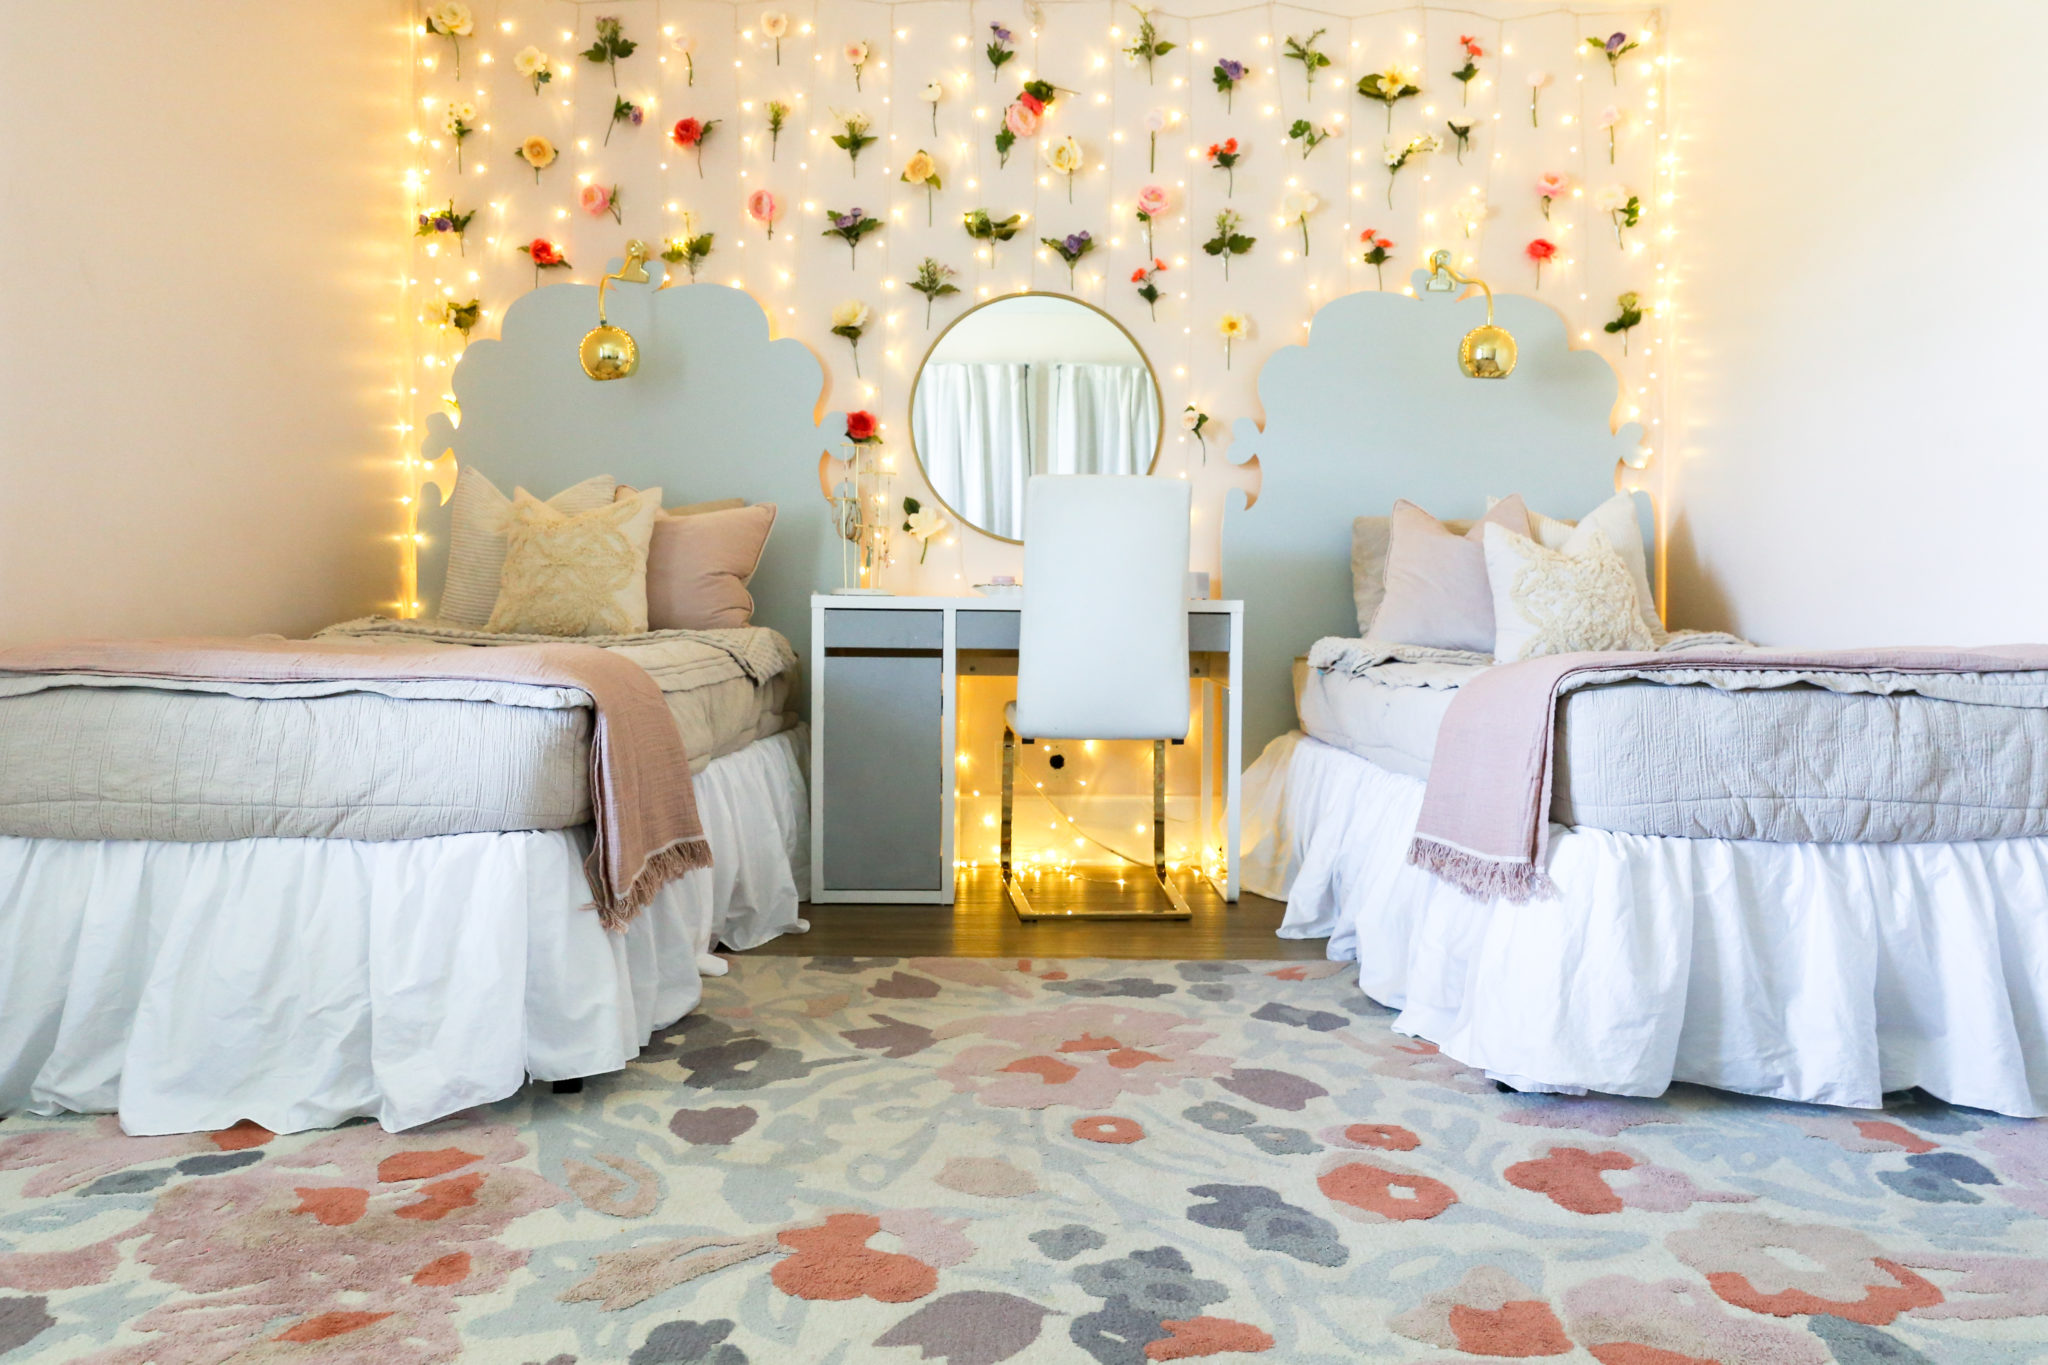 Girls Bedroom Idea | Savannah's Girls Room Sources - Classy Clutter